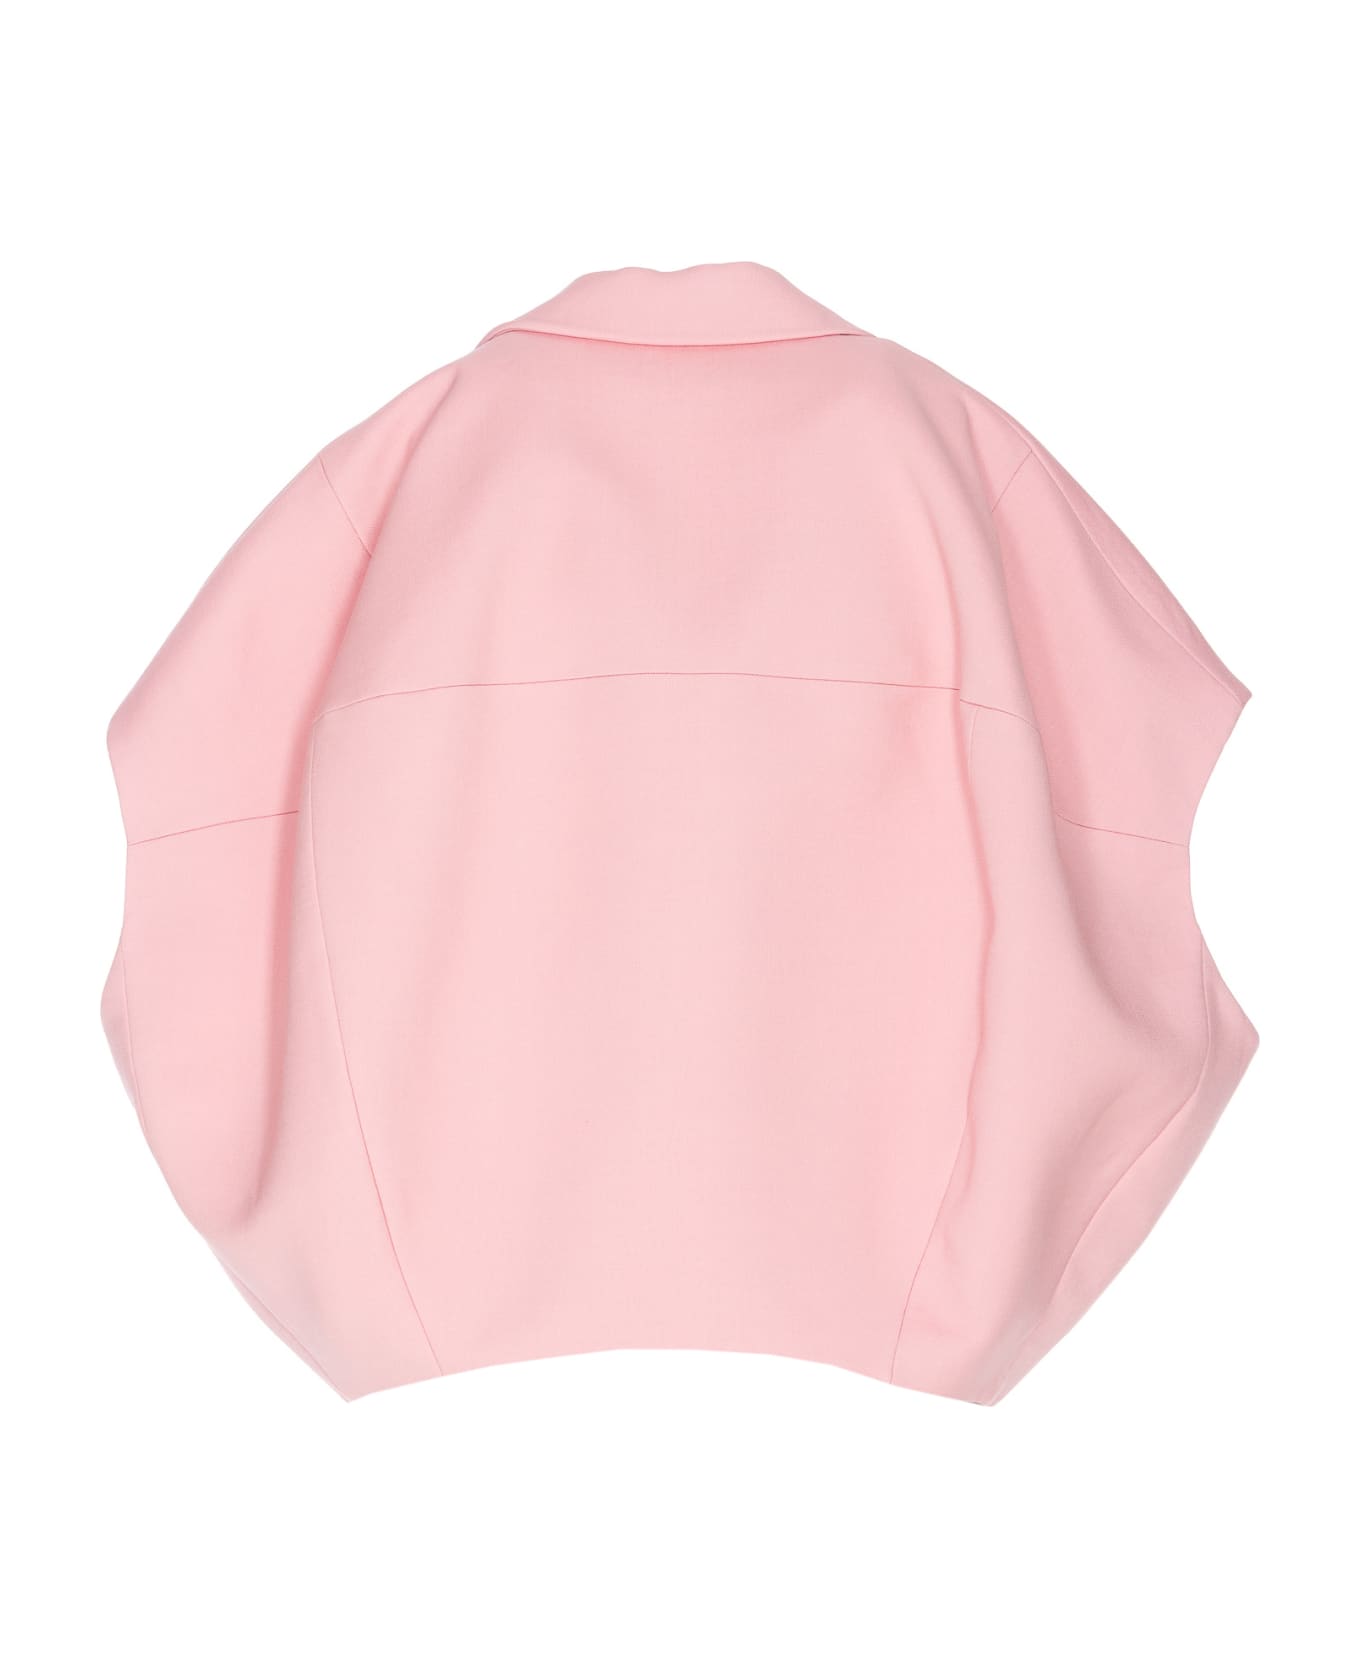 Marni Jacket - Pink